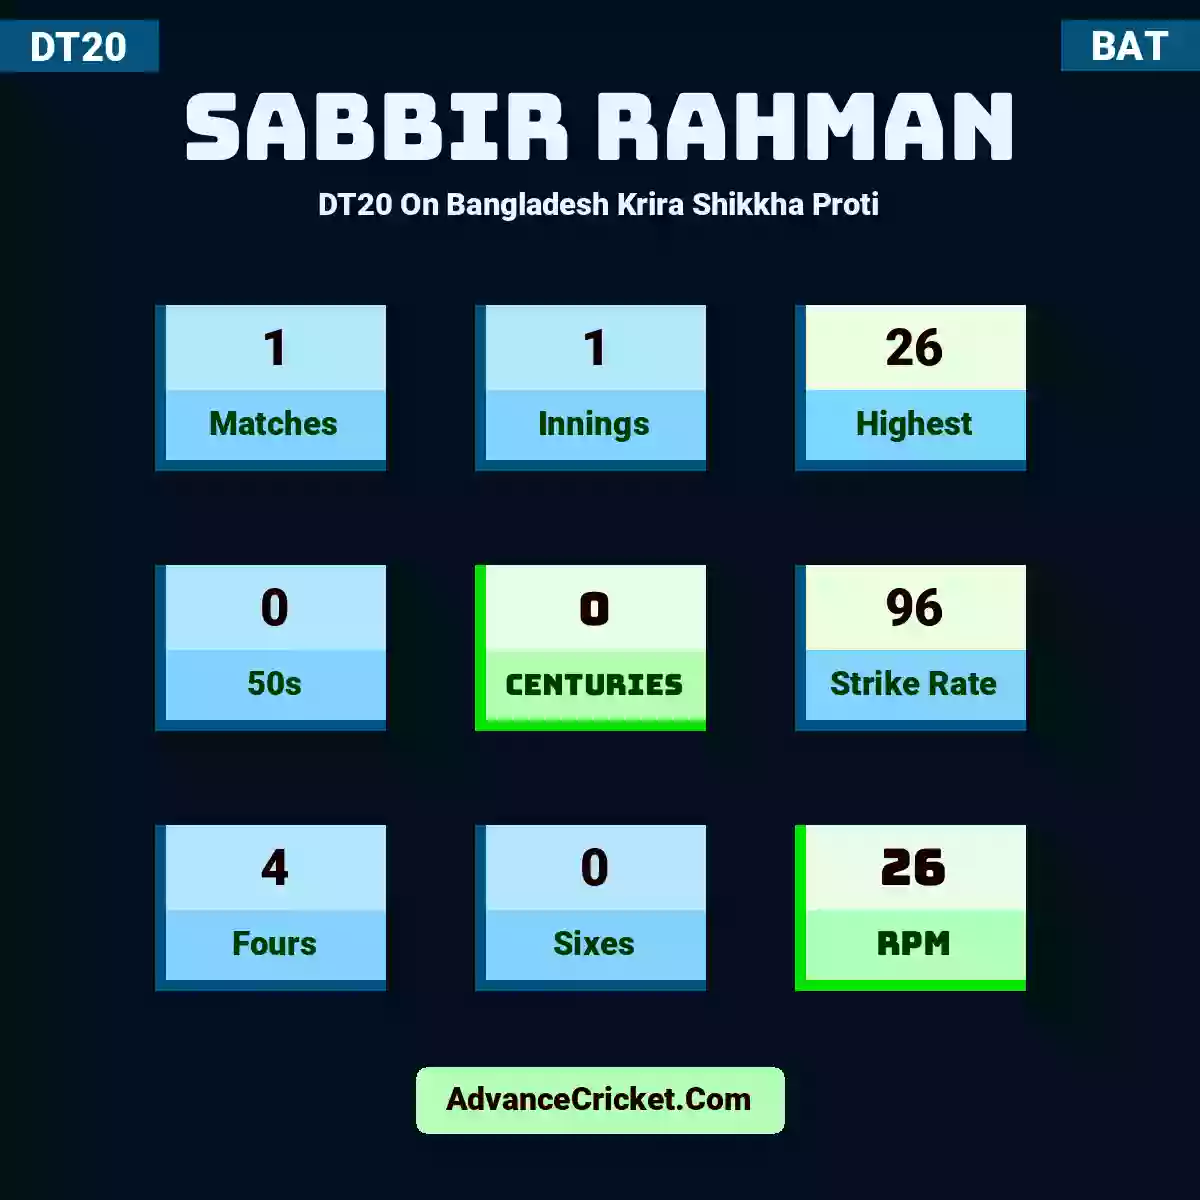 Sabbir Rahman DT20  On Bangladesh Krira Shikkha Proti, Sabbir Rahman played 1 matches, scored 90 runs as highest, 1 half-centuries, and 0 centuries, with a strike rate of 108. S.Rahman hit 6 fours and 3 sixes, with an RPM of 90.